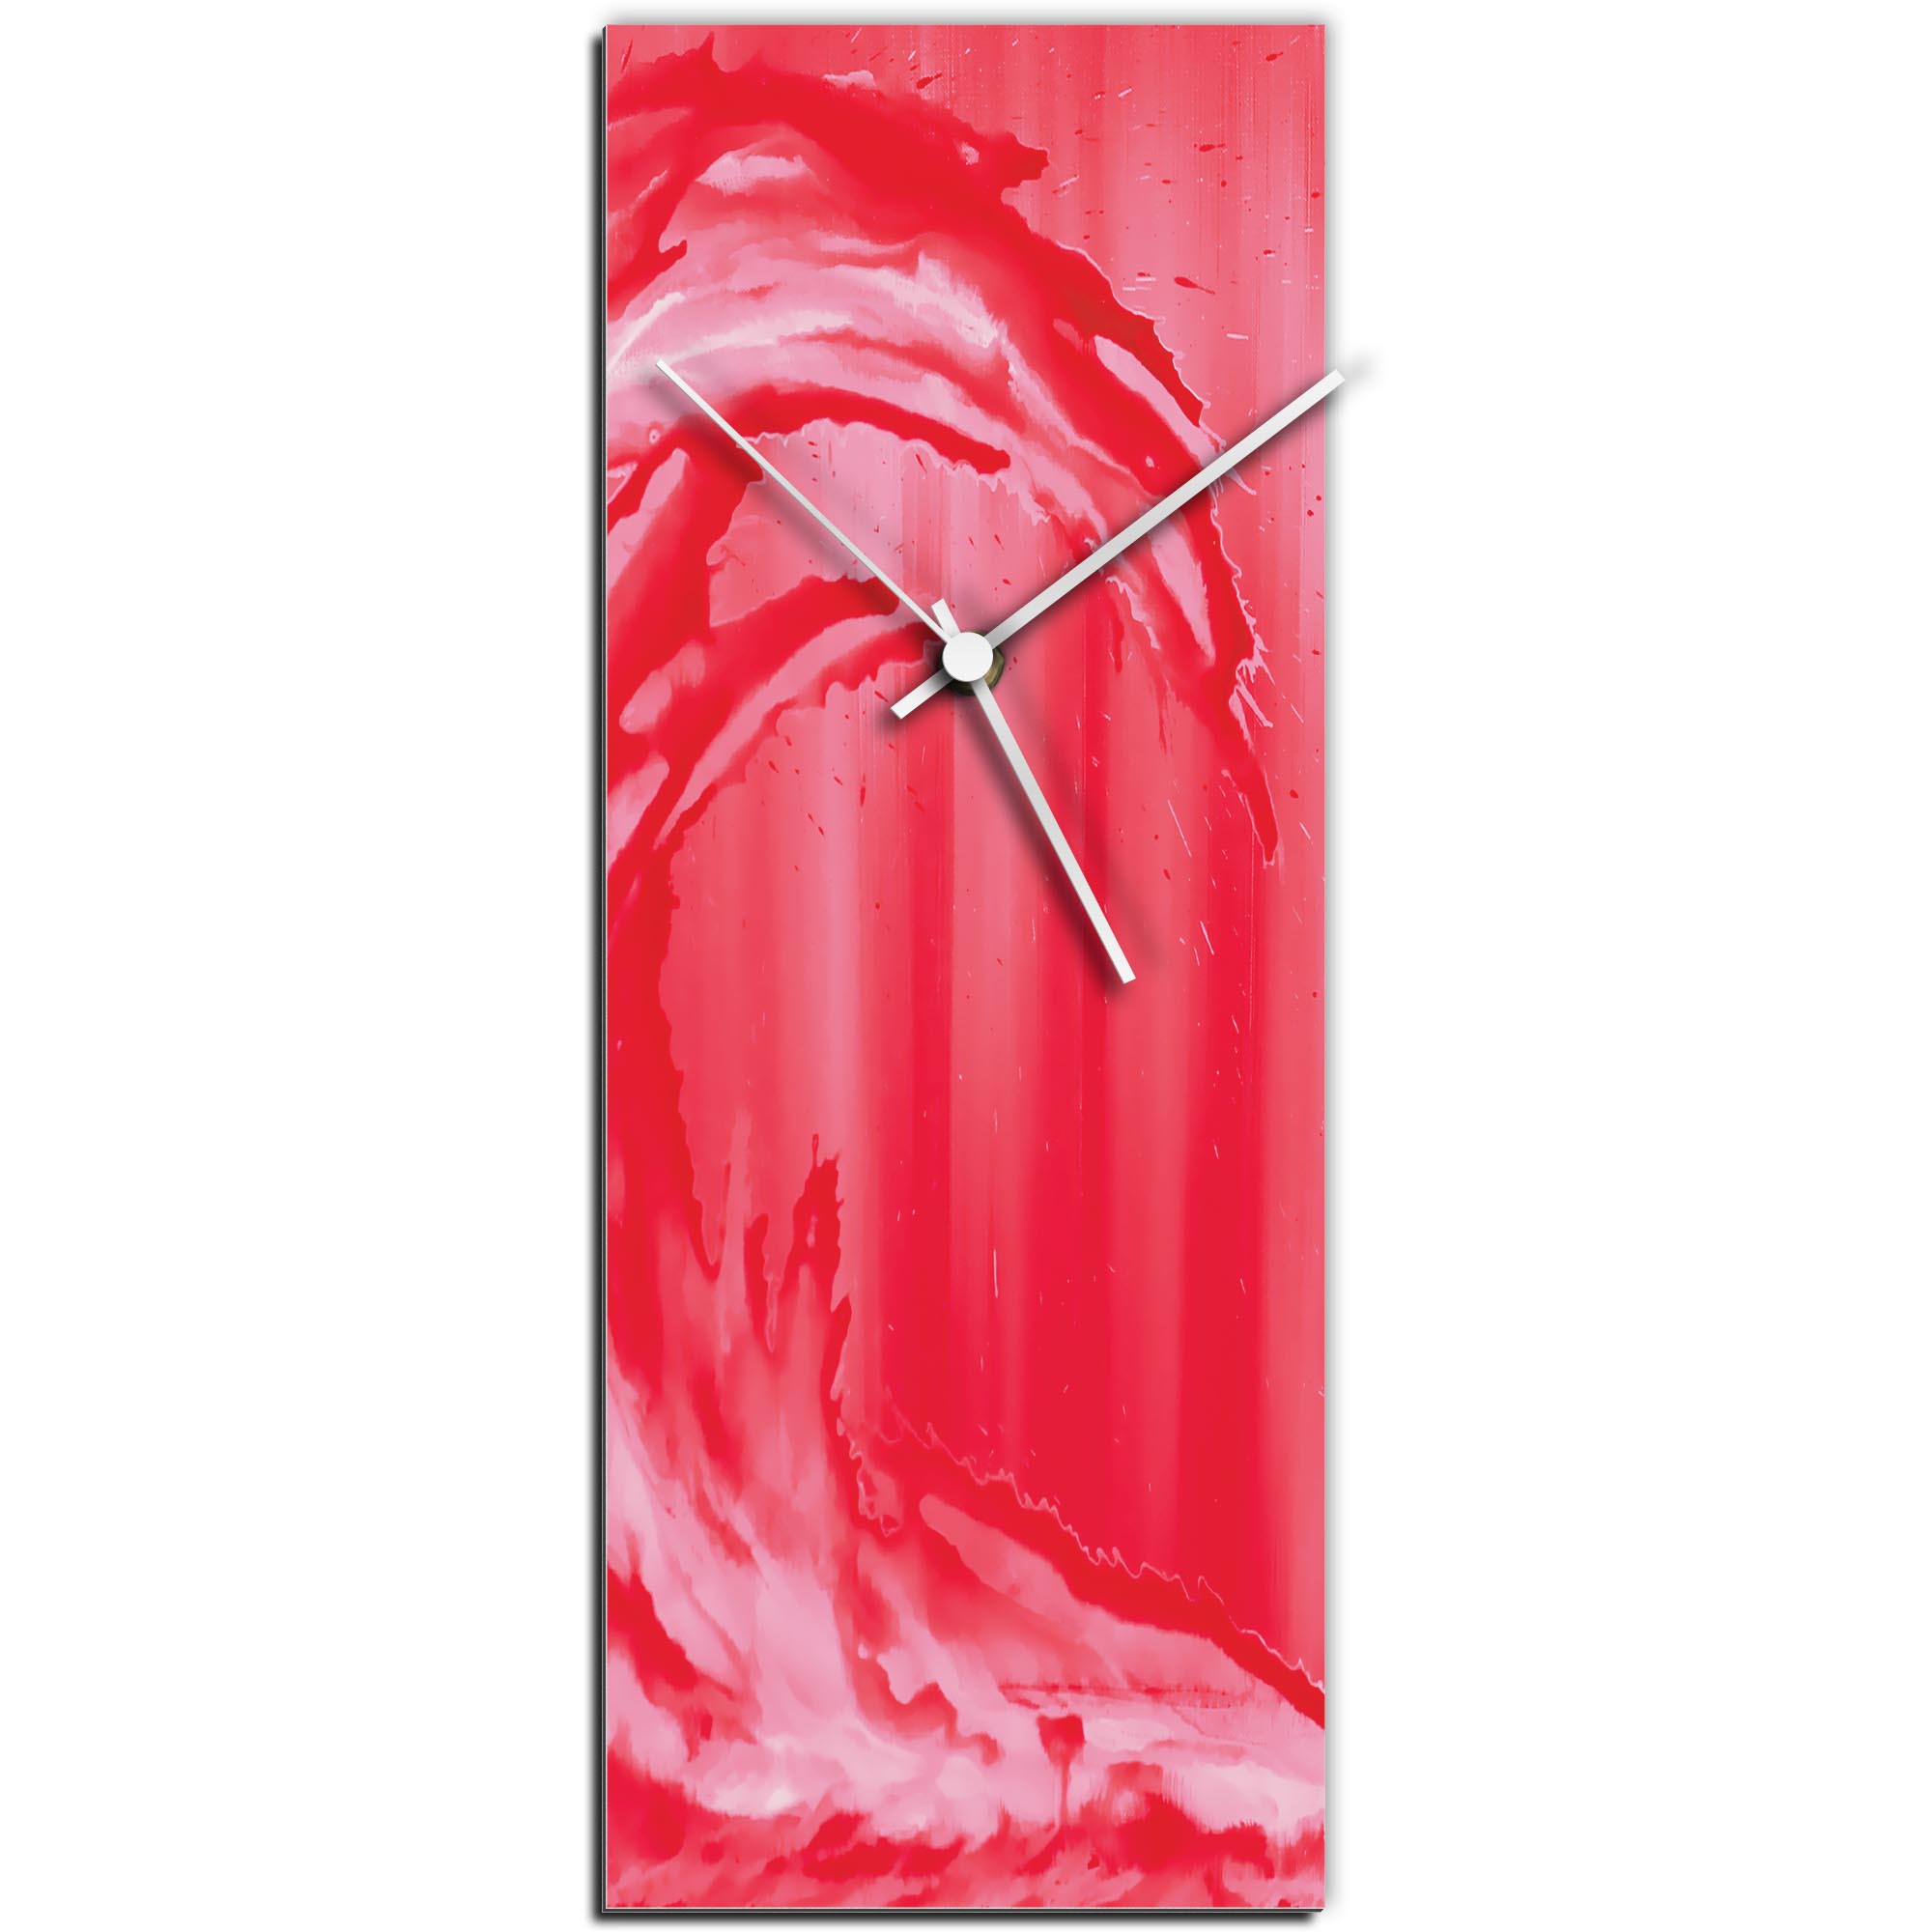 Mendo Vasilevski 'Red Wave v1 Clock Large' 9in x 24in Modern Wall Clock on Aluminum Composite